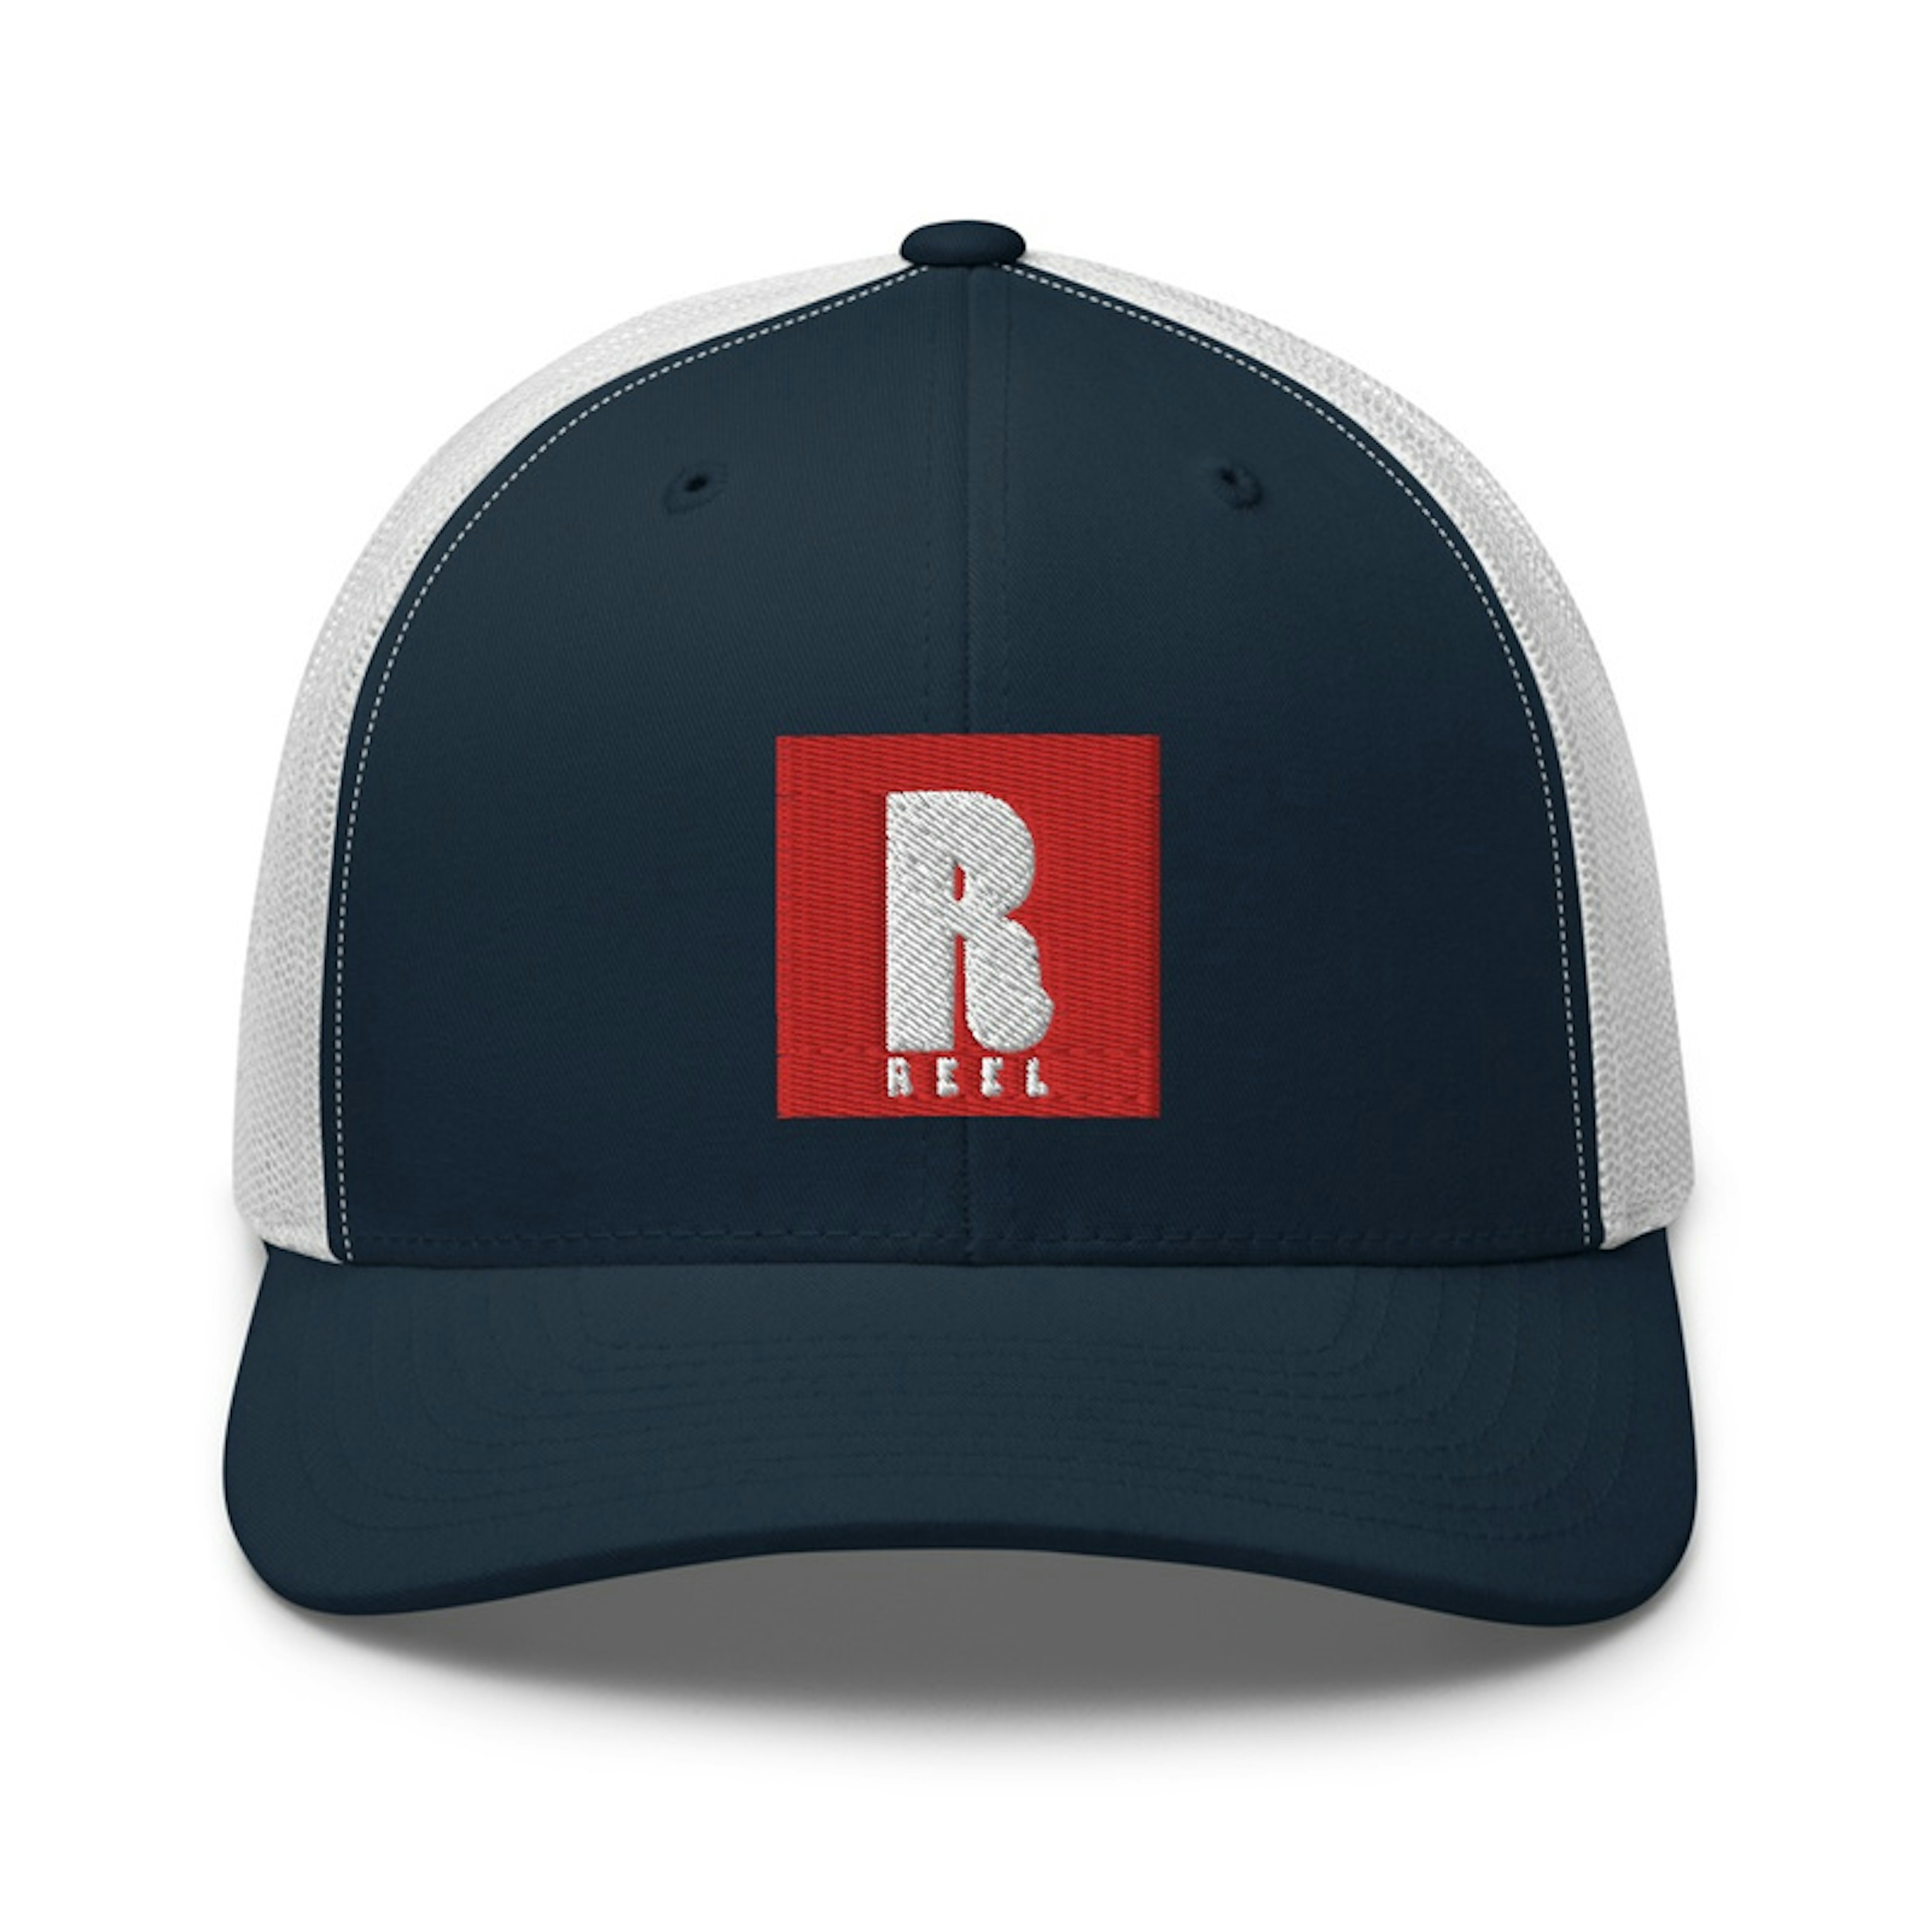 REEL Royalty Logo